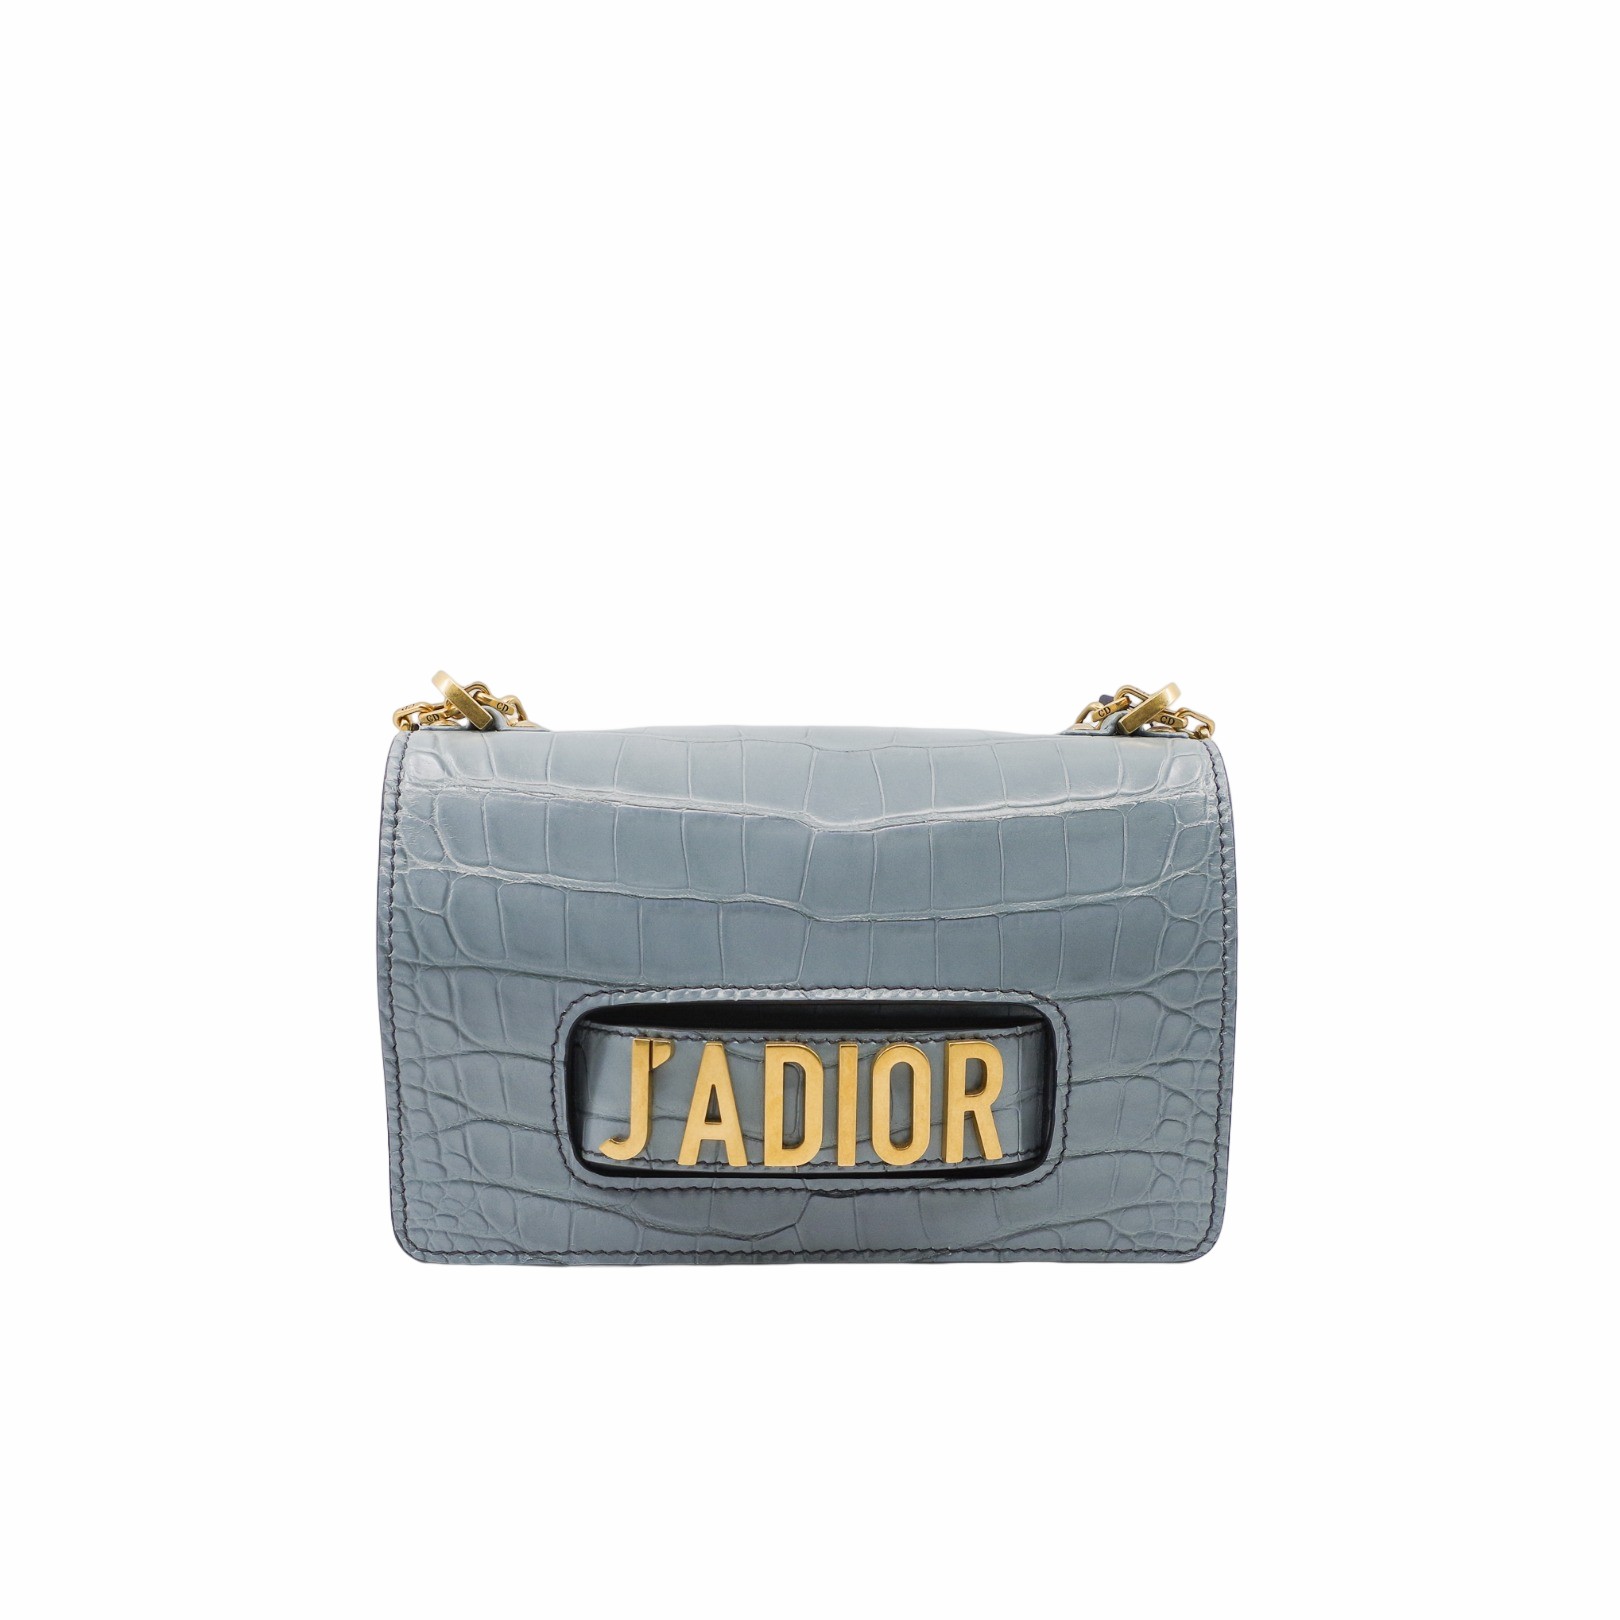 Dior Jadore large gold mesh makeup pouch for sale online  eBay